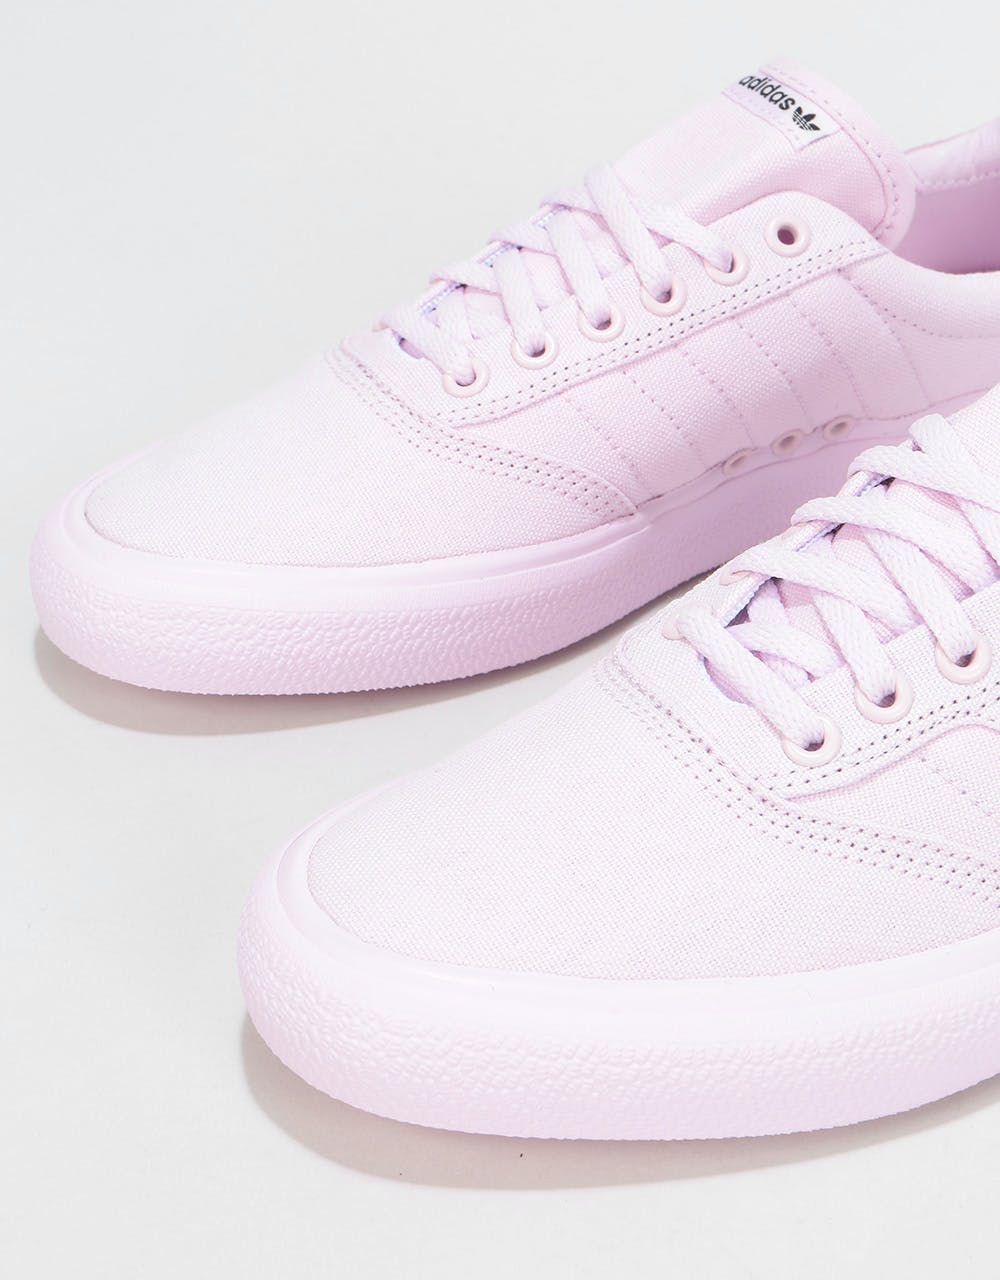 Adidas 3MC Skate Shoes - Aero Pink/Aero Pink/Core Black